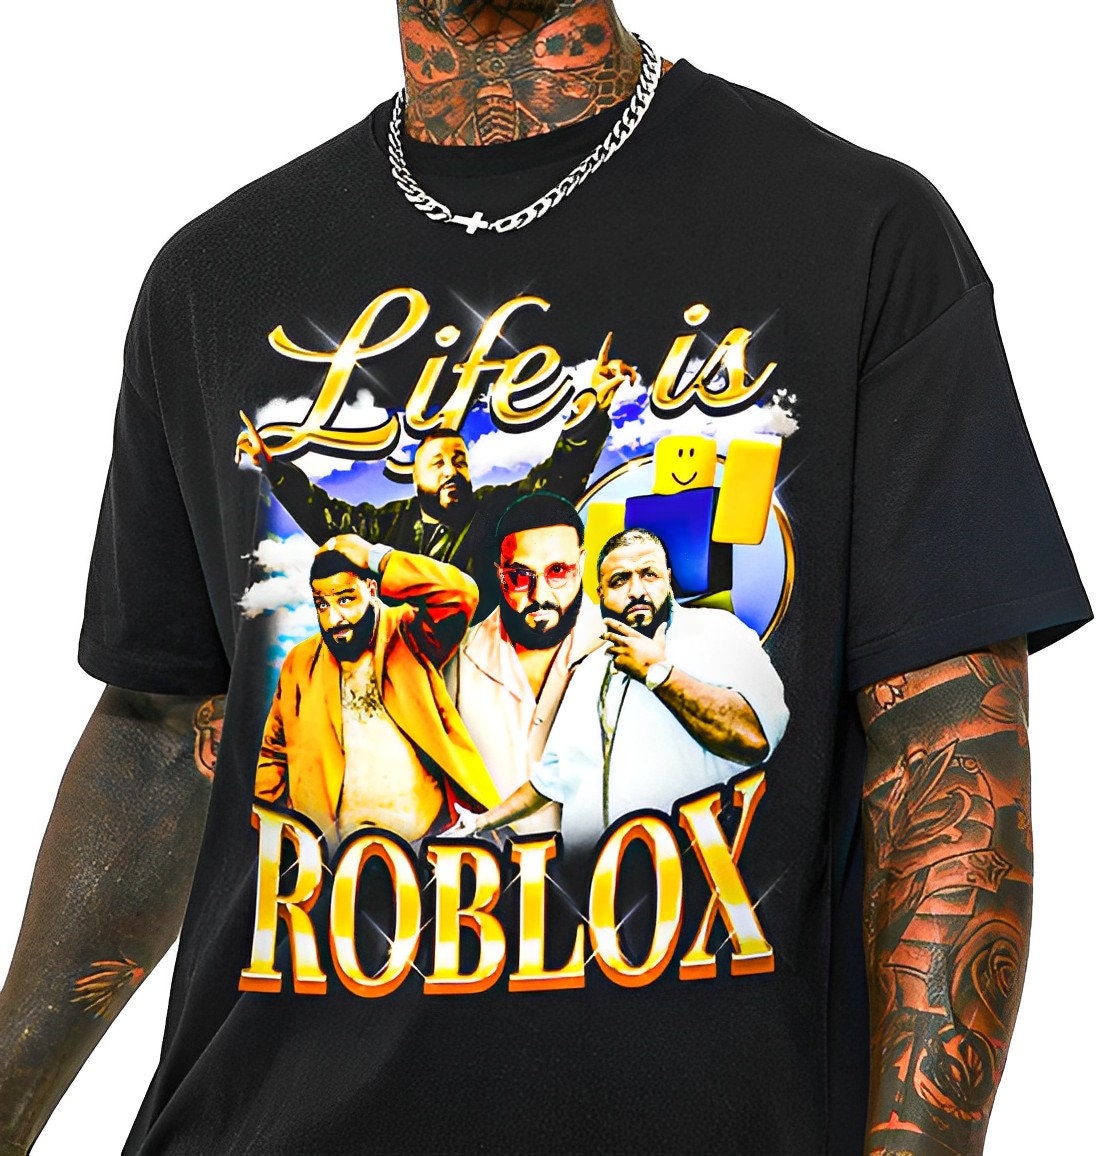 Bear idk  Free t shirt design, Roblox t shirts, Roblox